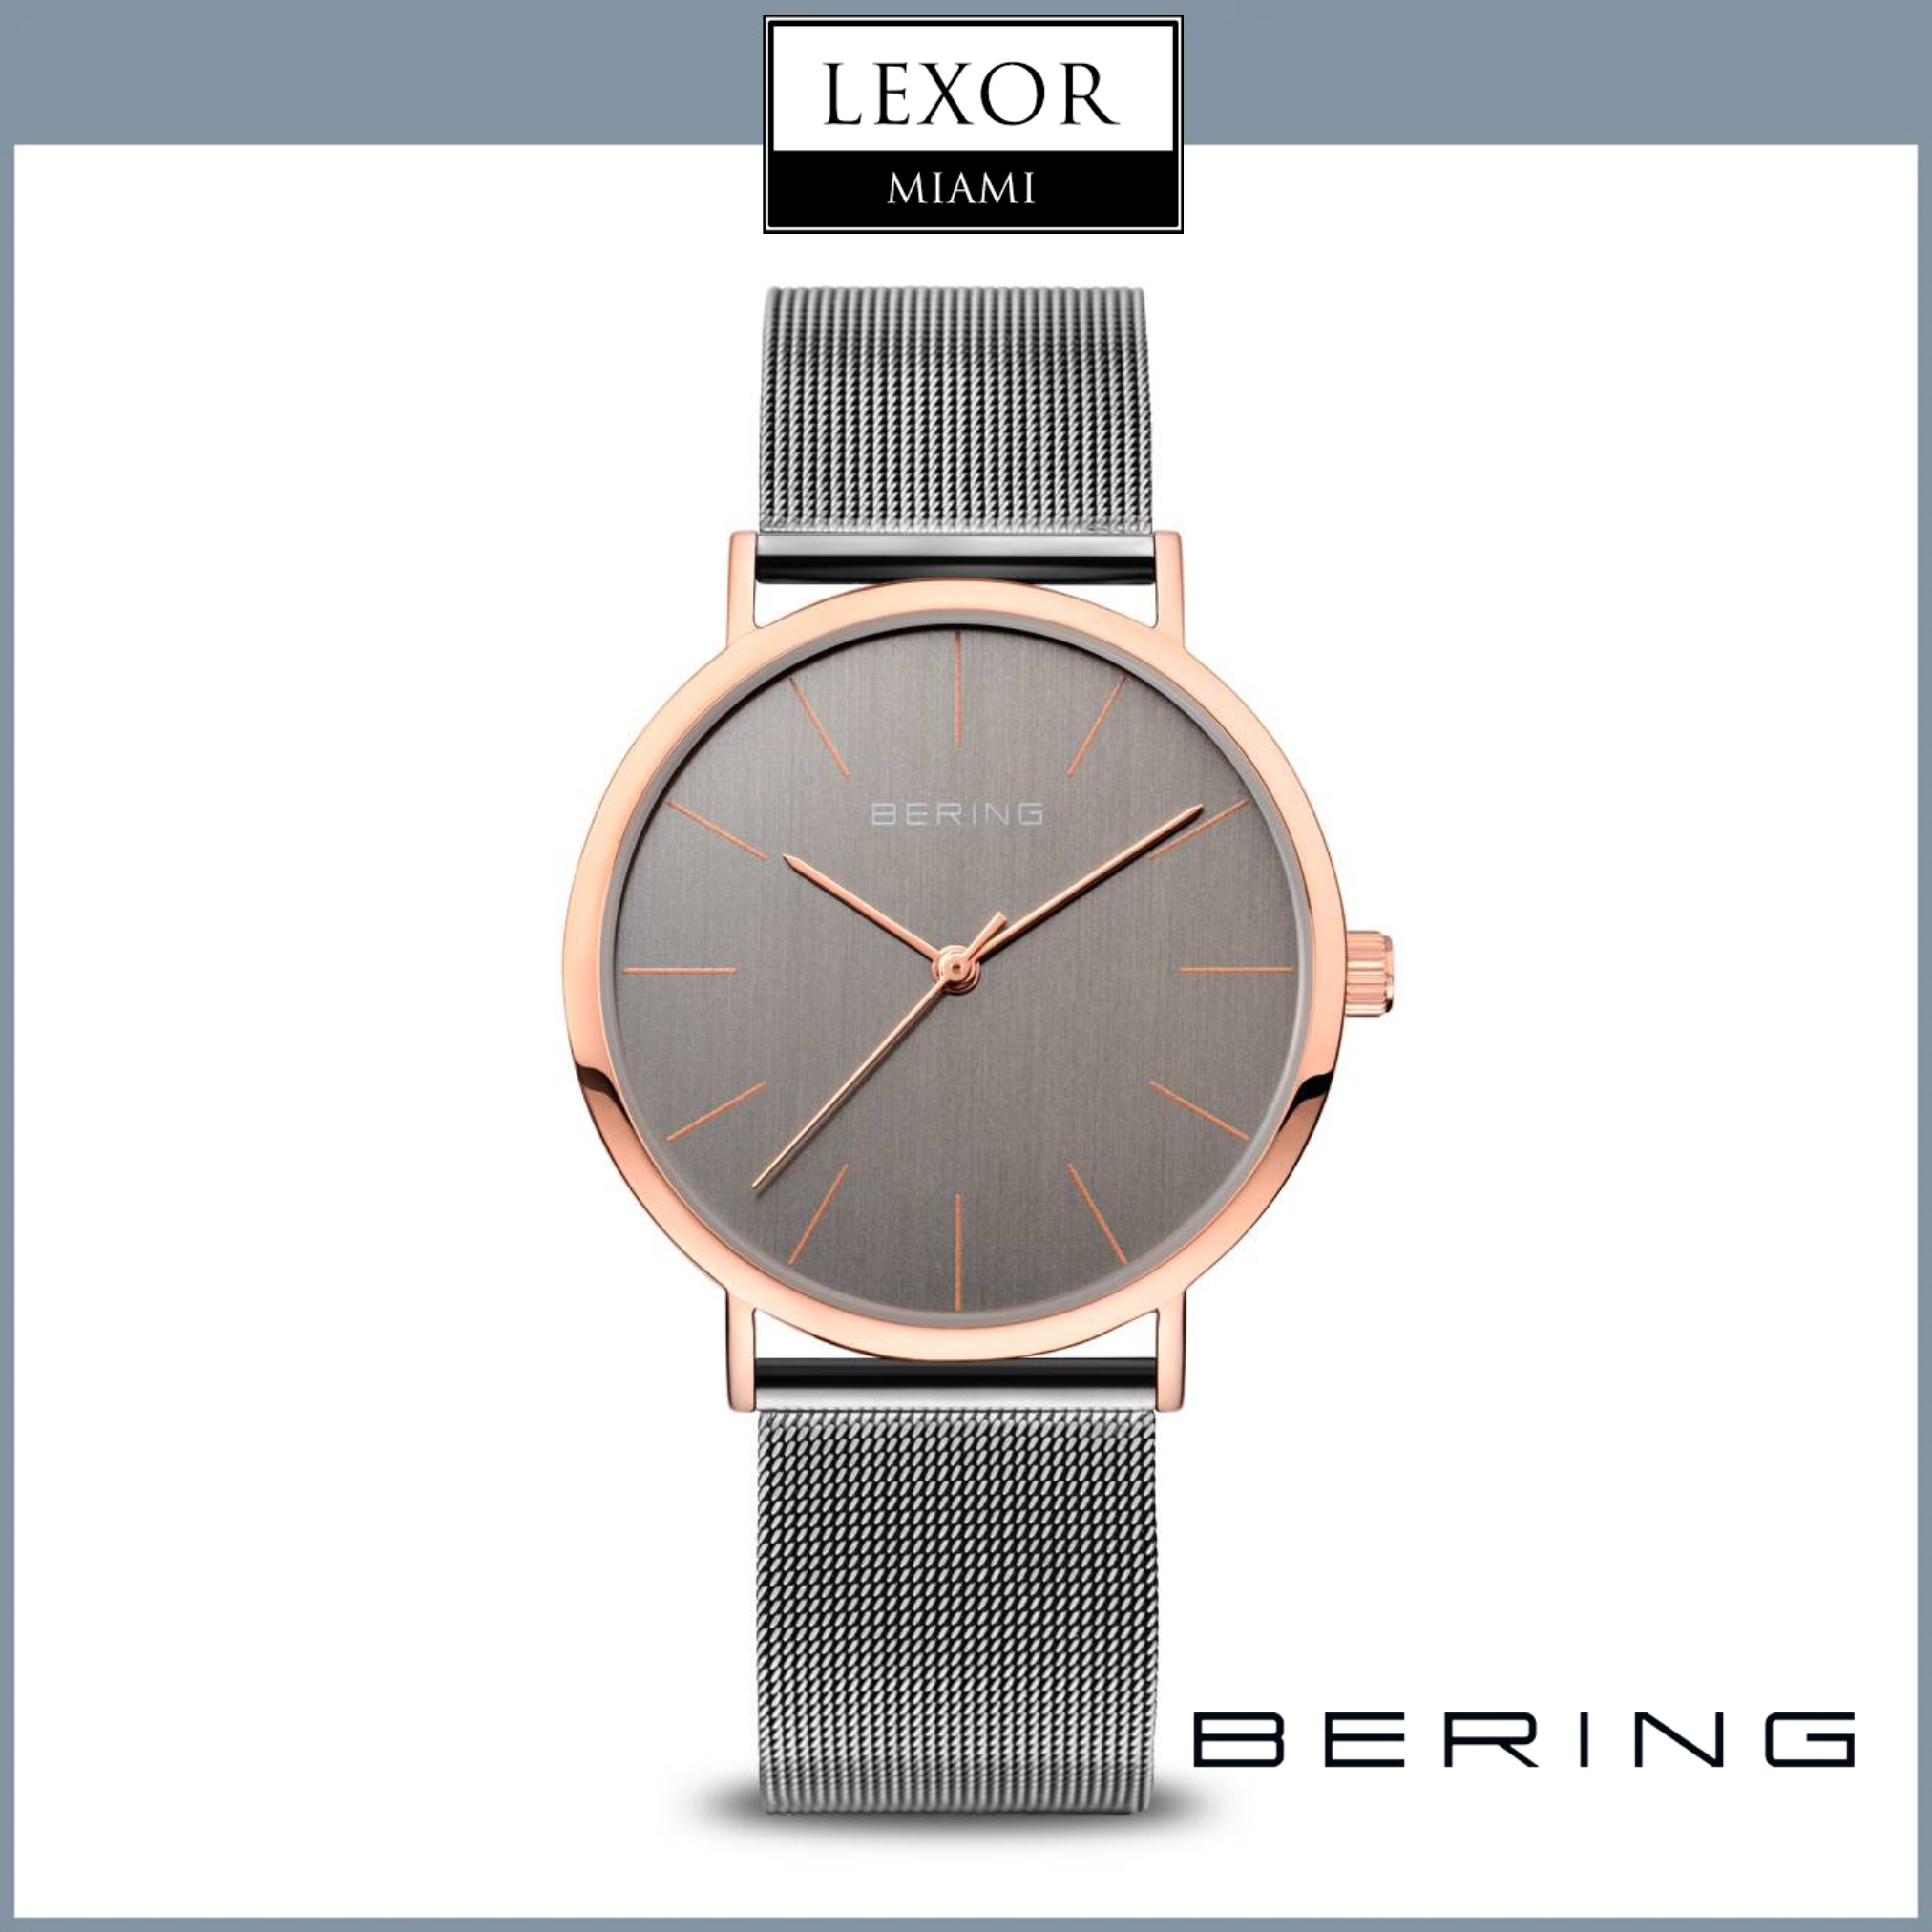 Bering Watches – Lexor Miami